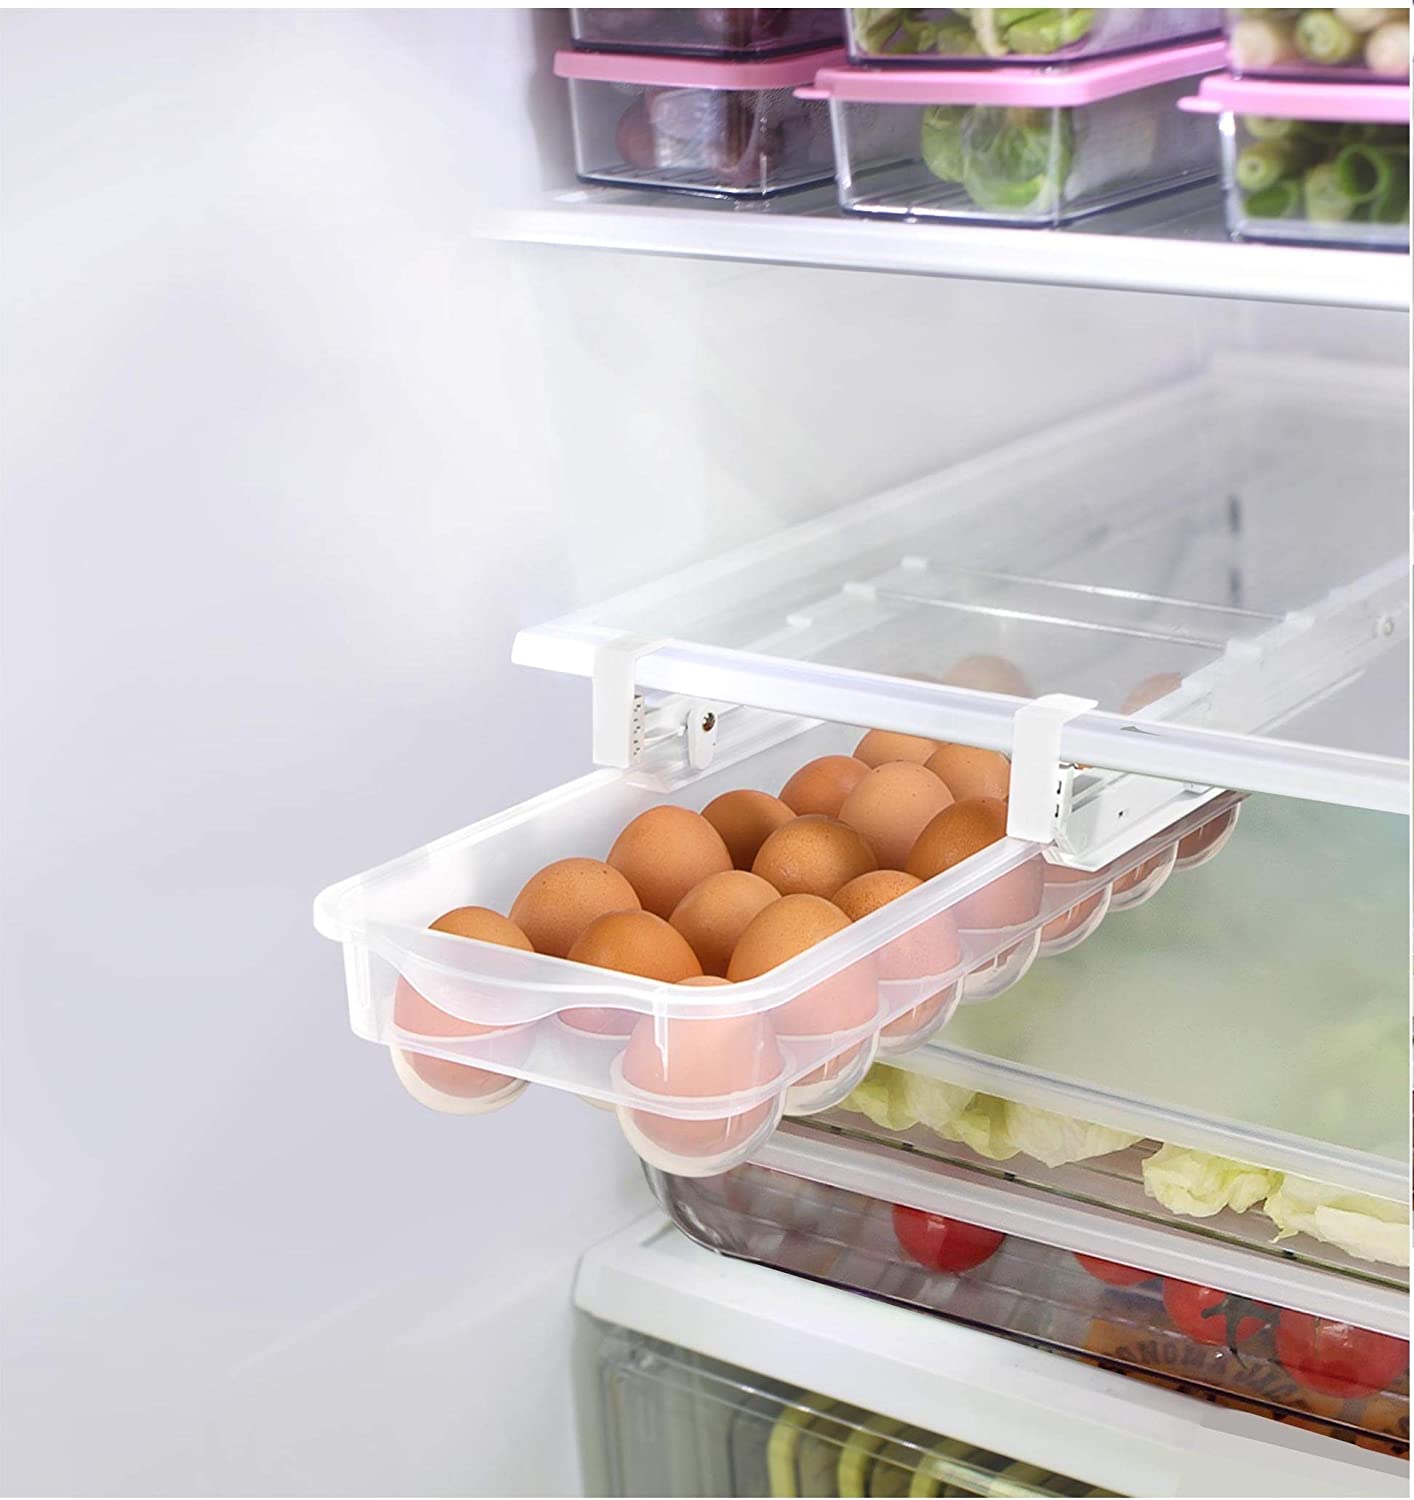 Egg Holder For Refrigerator, Snap On Egg Container For